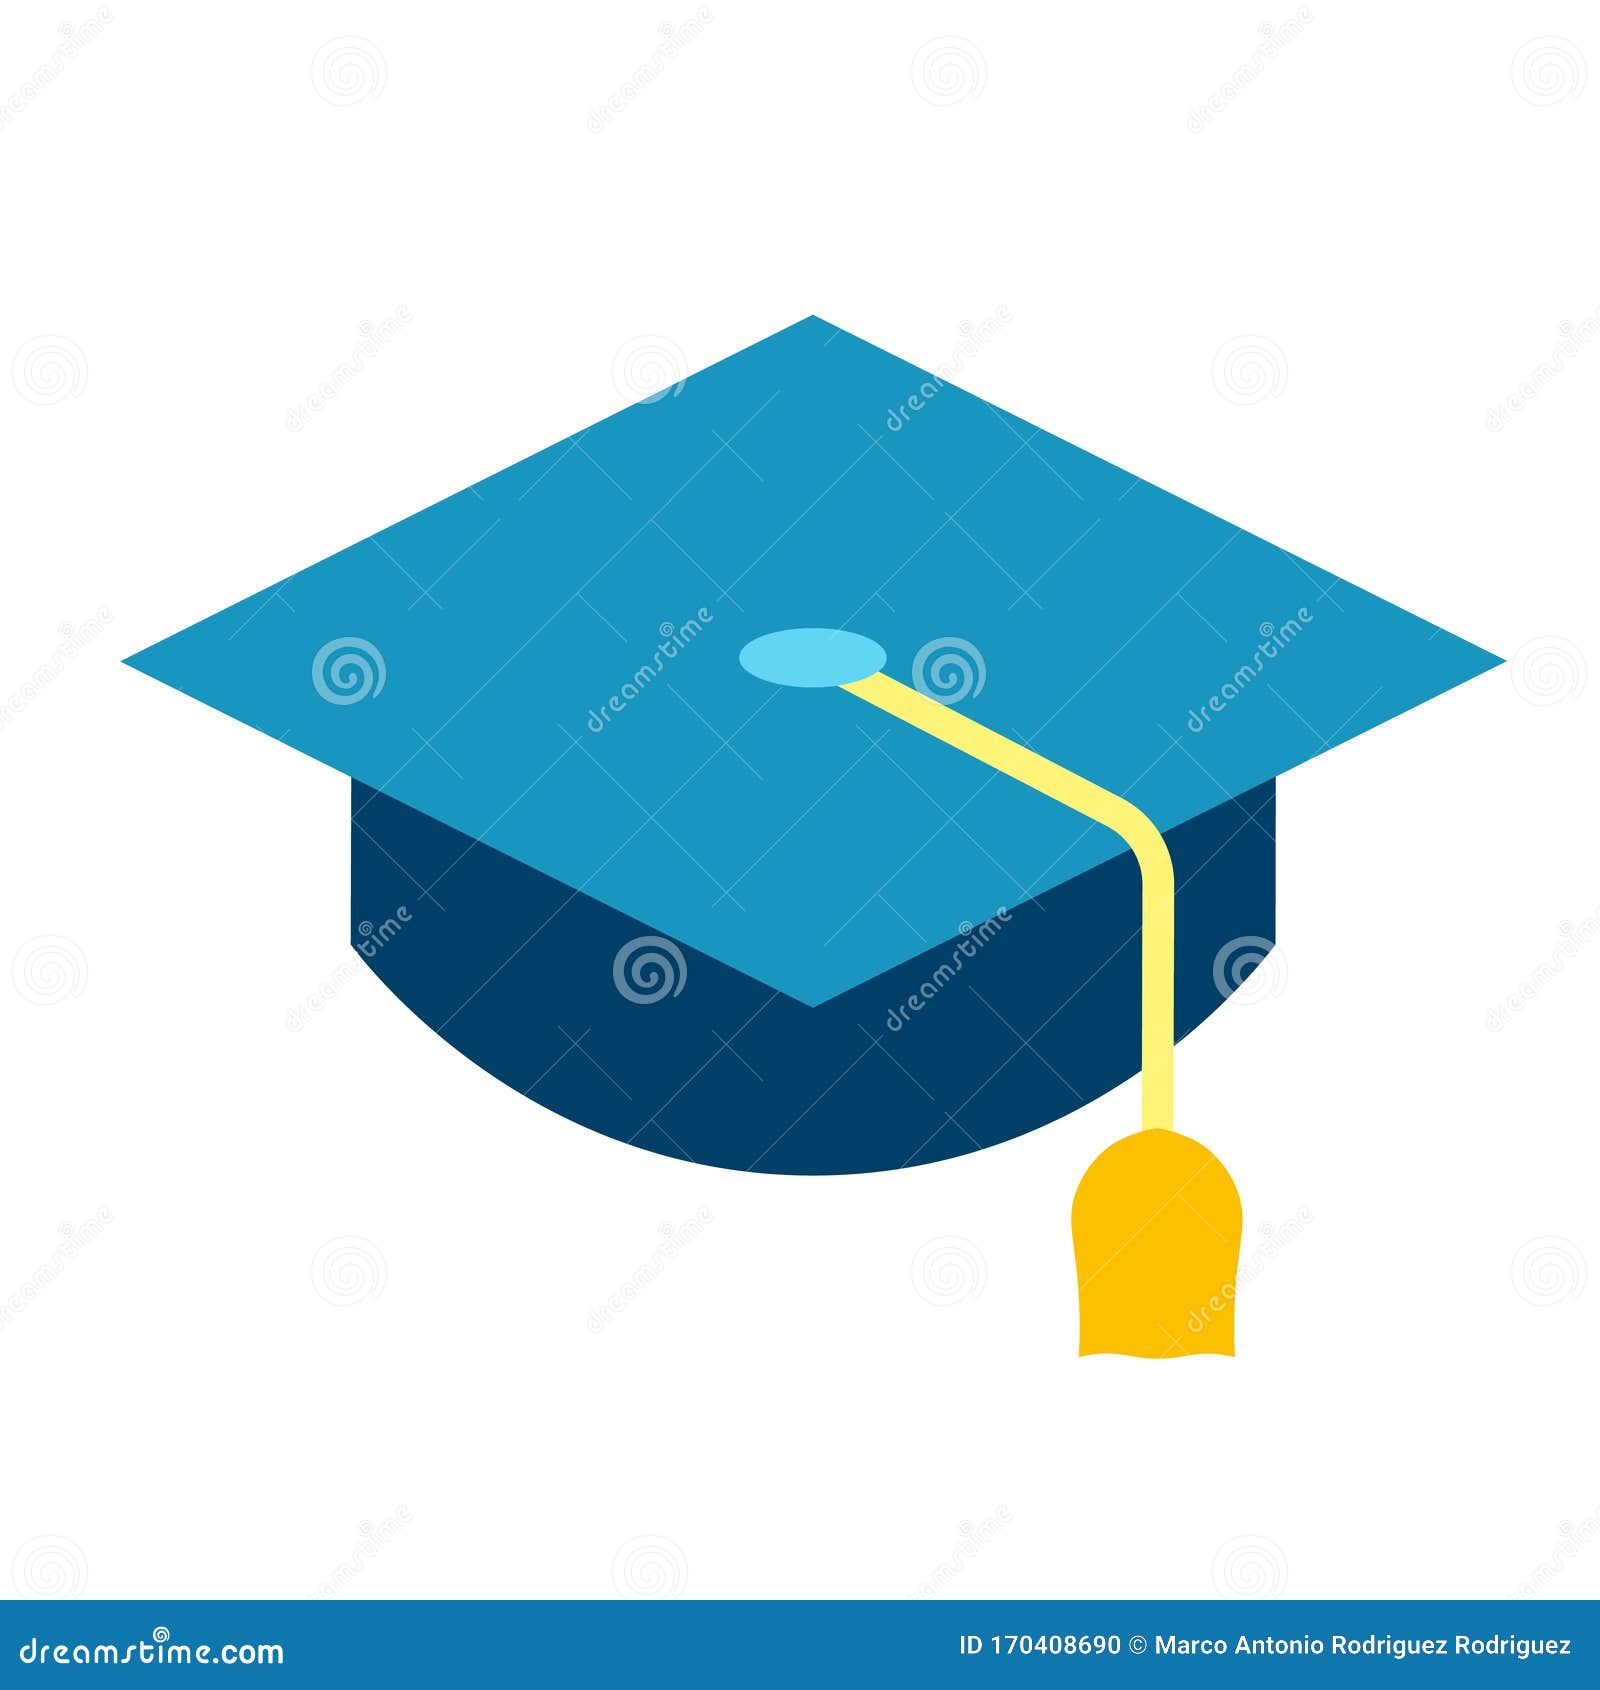 Cartoon Graduation Cap Isolated on White Background Stock Illustration ...